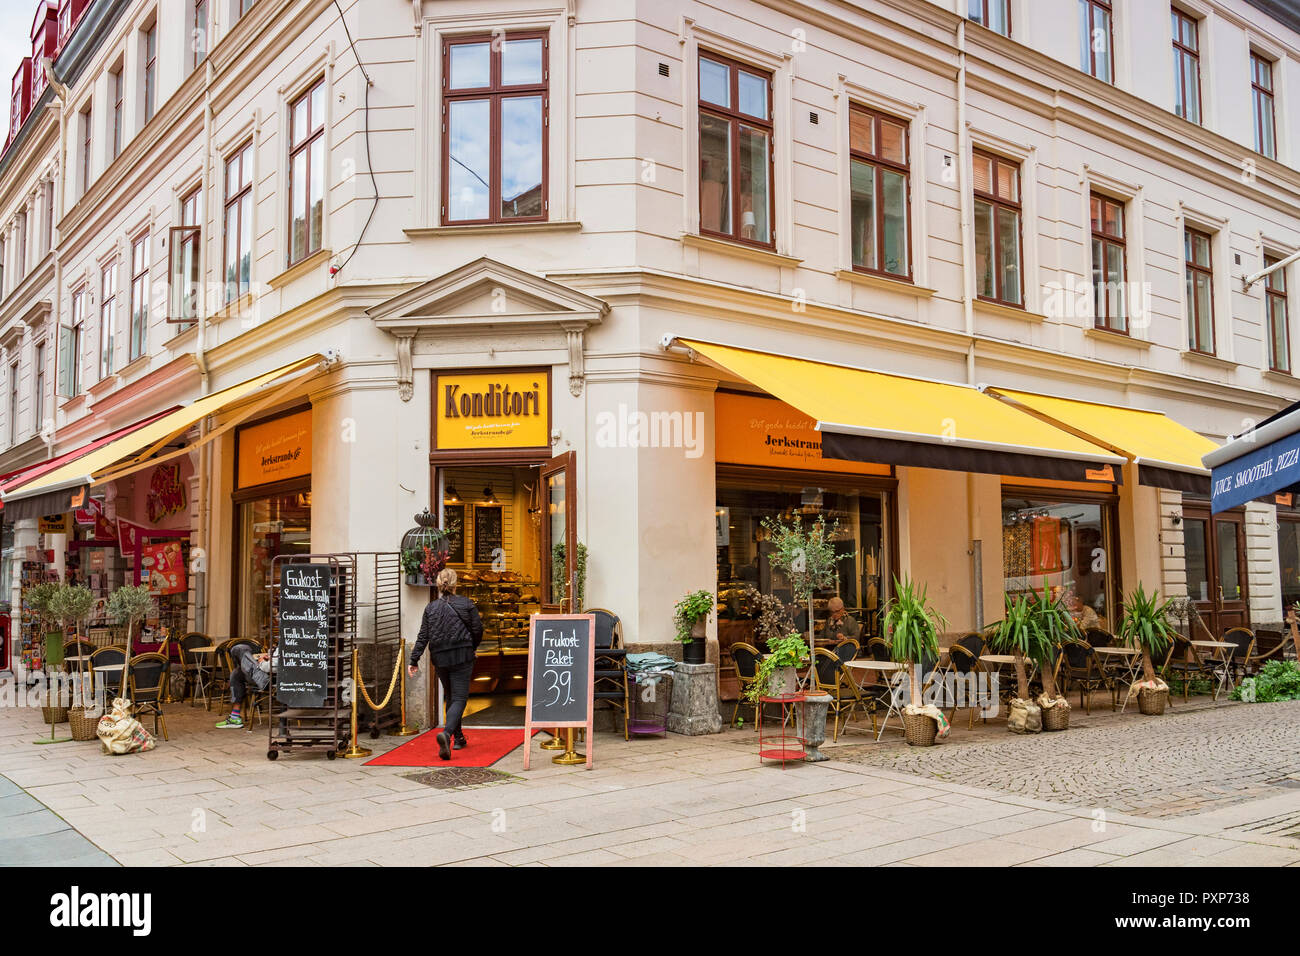 14 September 2018: Gothenburg, Sweden - Woman entering Konditori Restuarant or coffee shop. Stock Photo